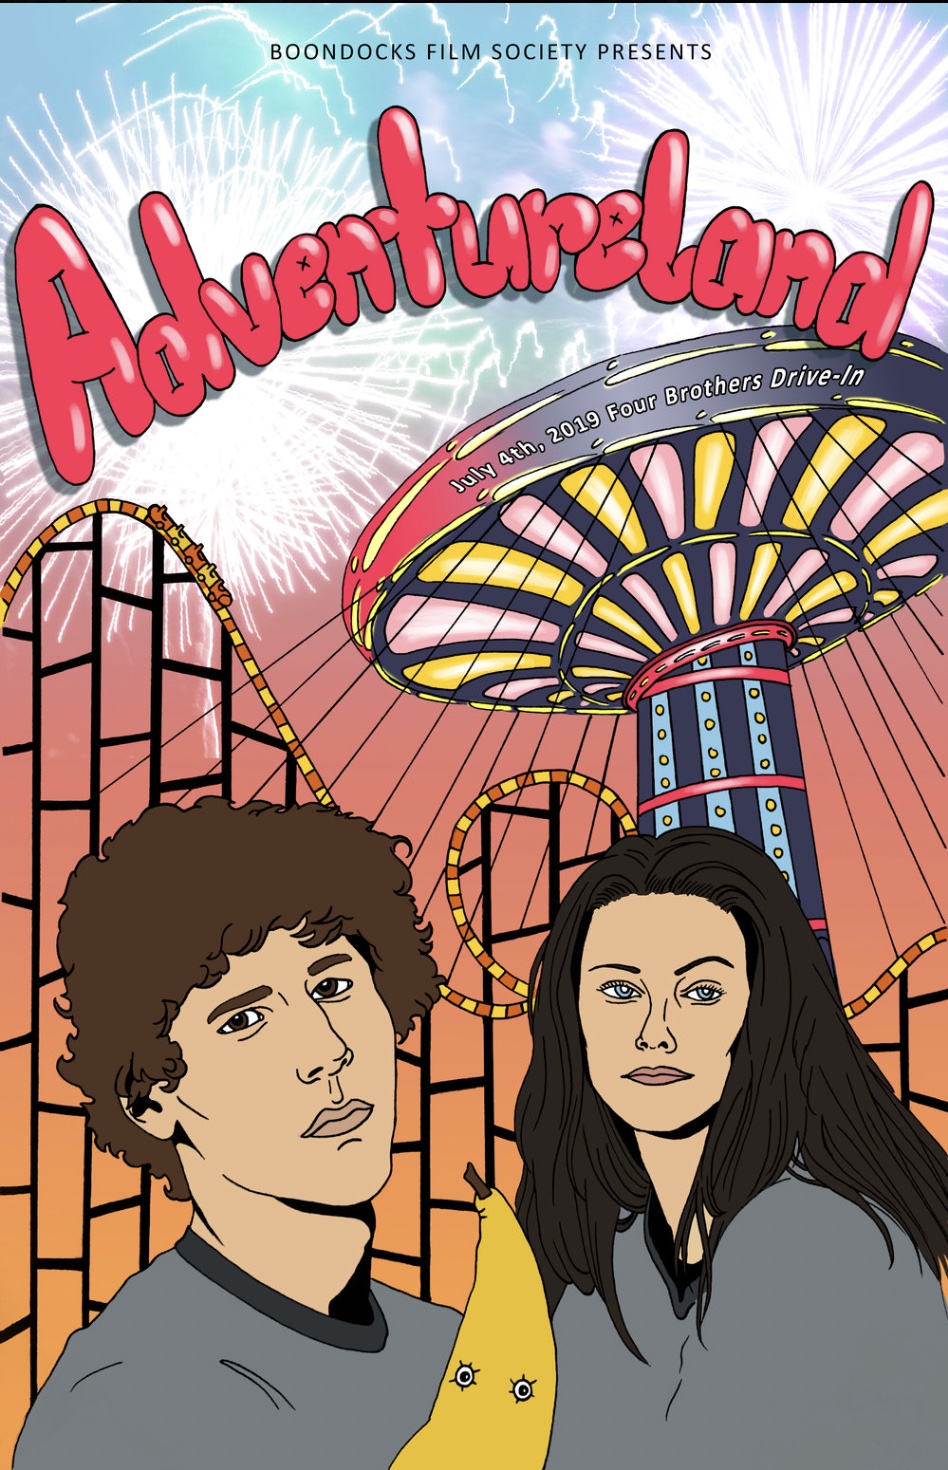 Promo Poster for Adventureland